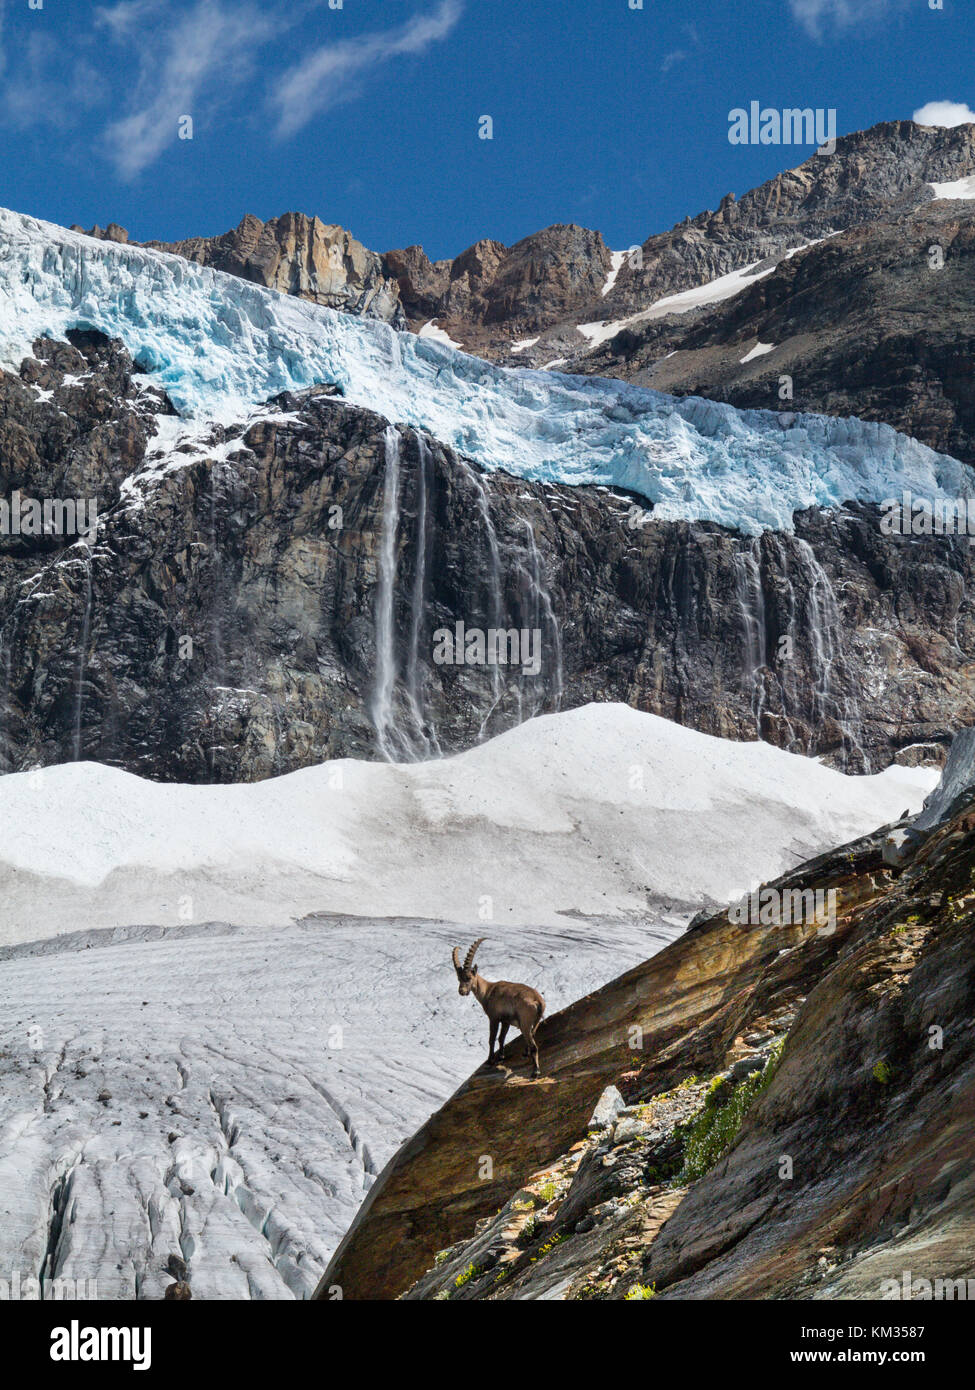 Ibex in high mountain - Italy Stock Photo